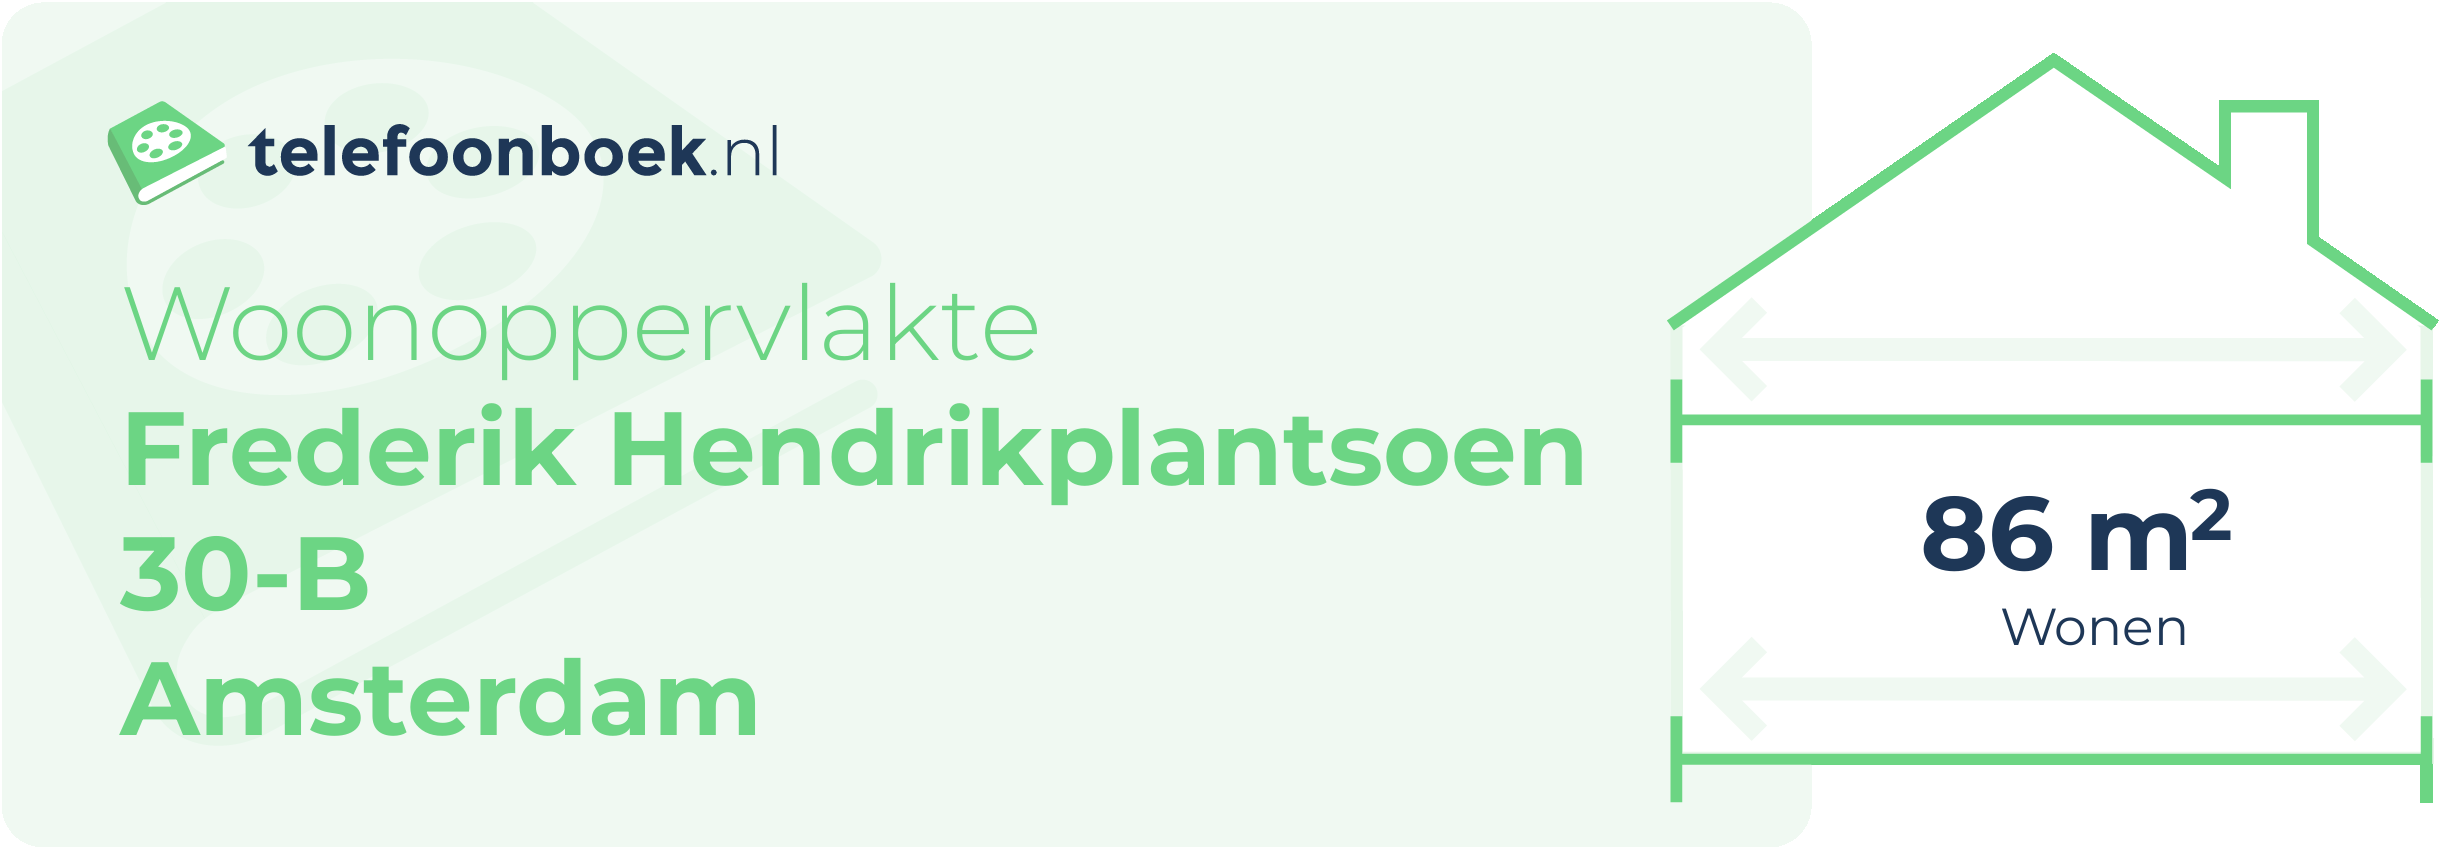 Woonoppervlakte Frederik Hendrikplantsoen 30-B Amsterdam